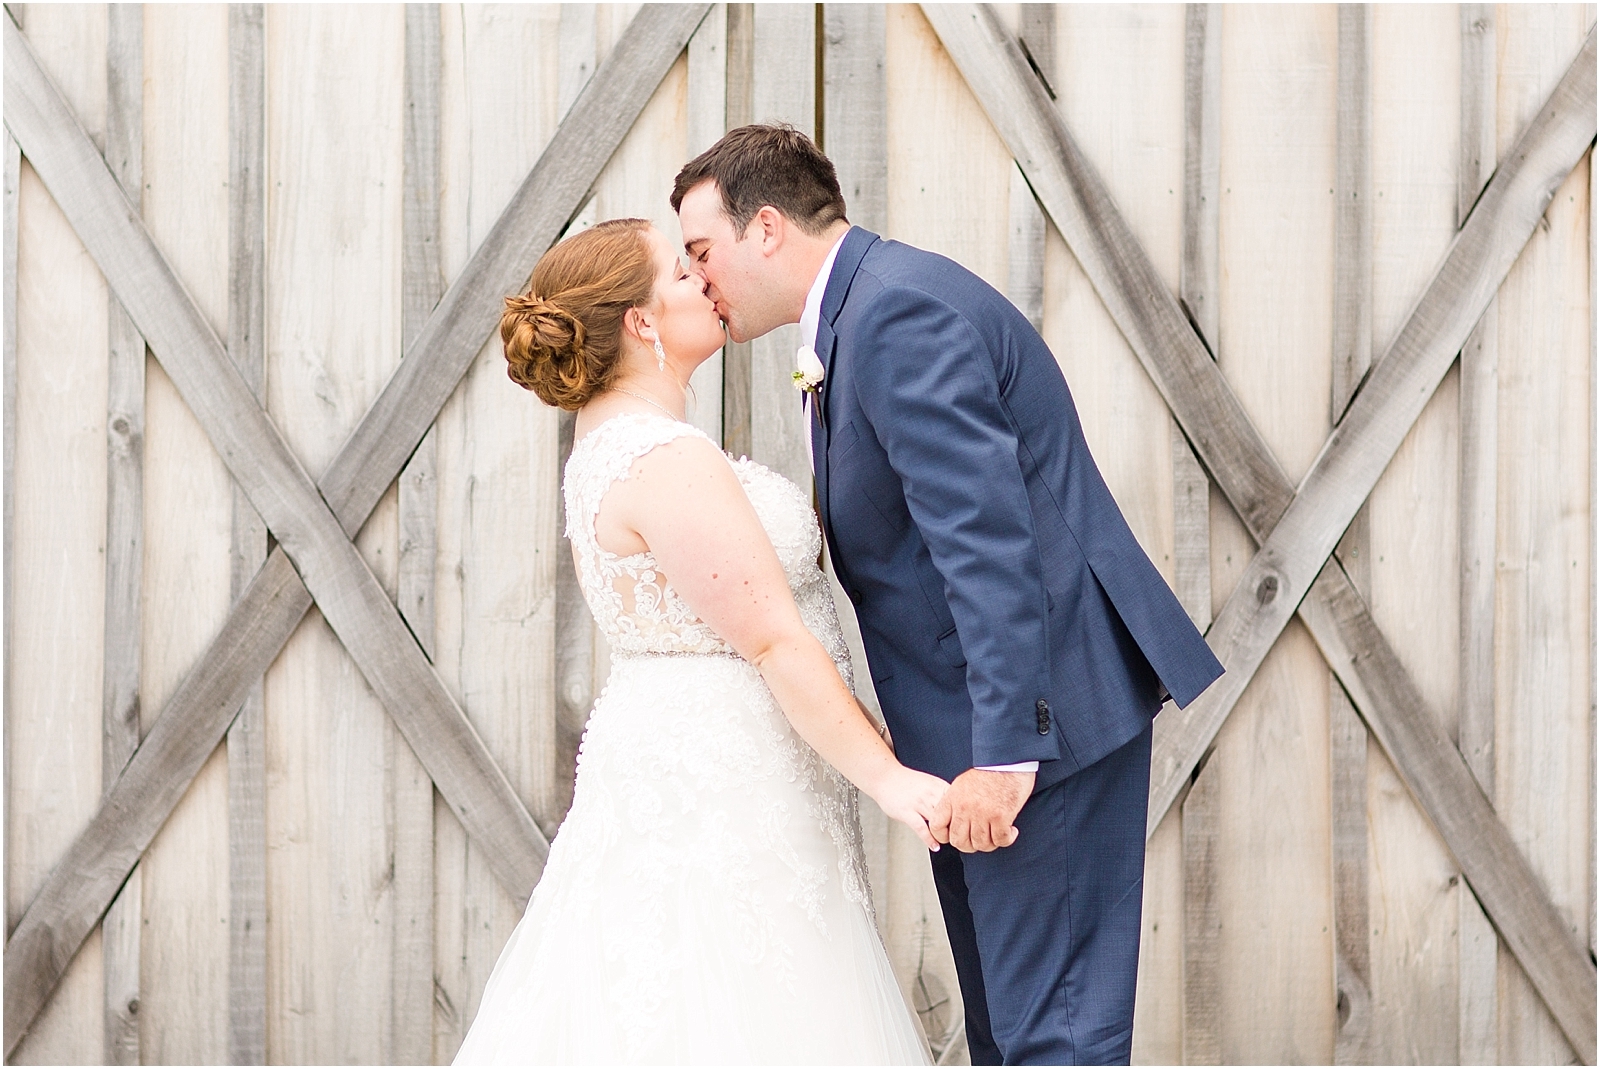 Rachel and Michael | Bret and Brandie Photography | Evansville Wedding Photographers 0030.jpg